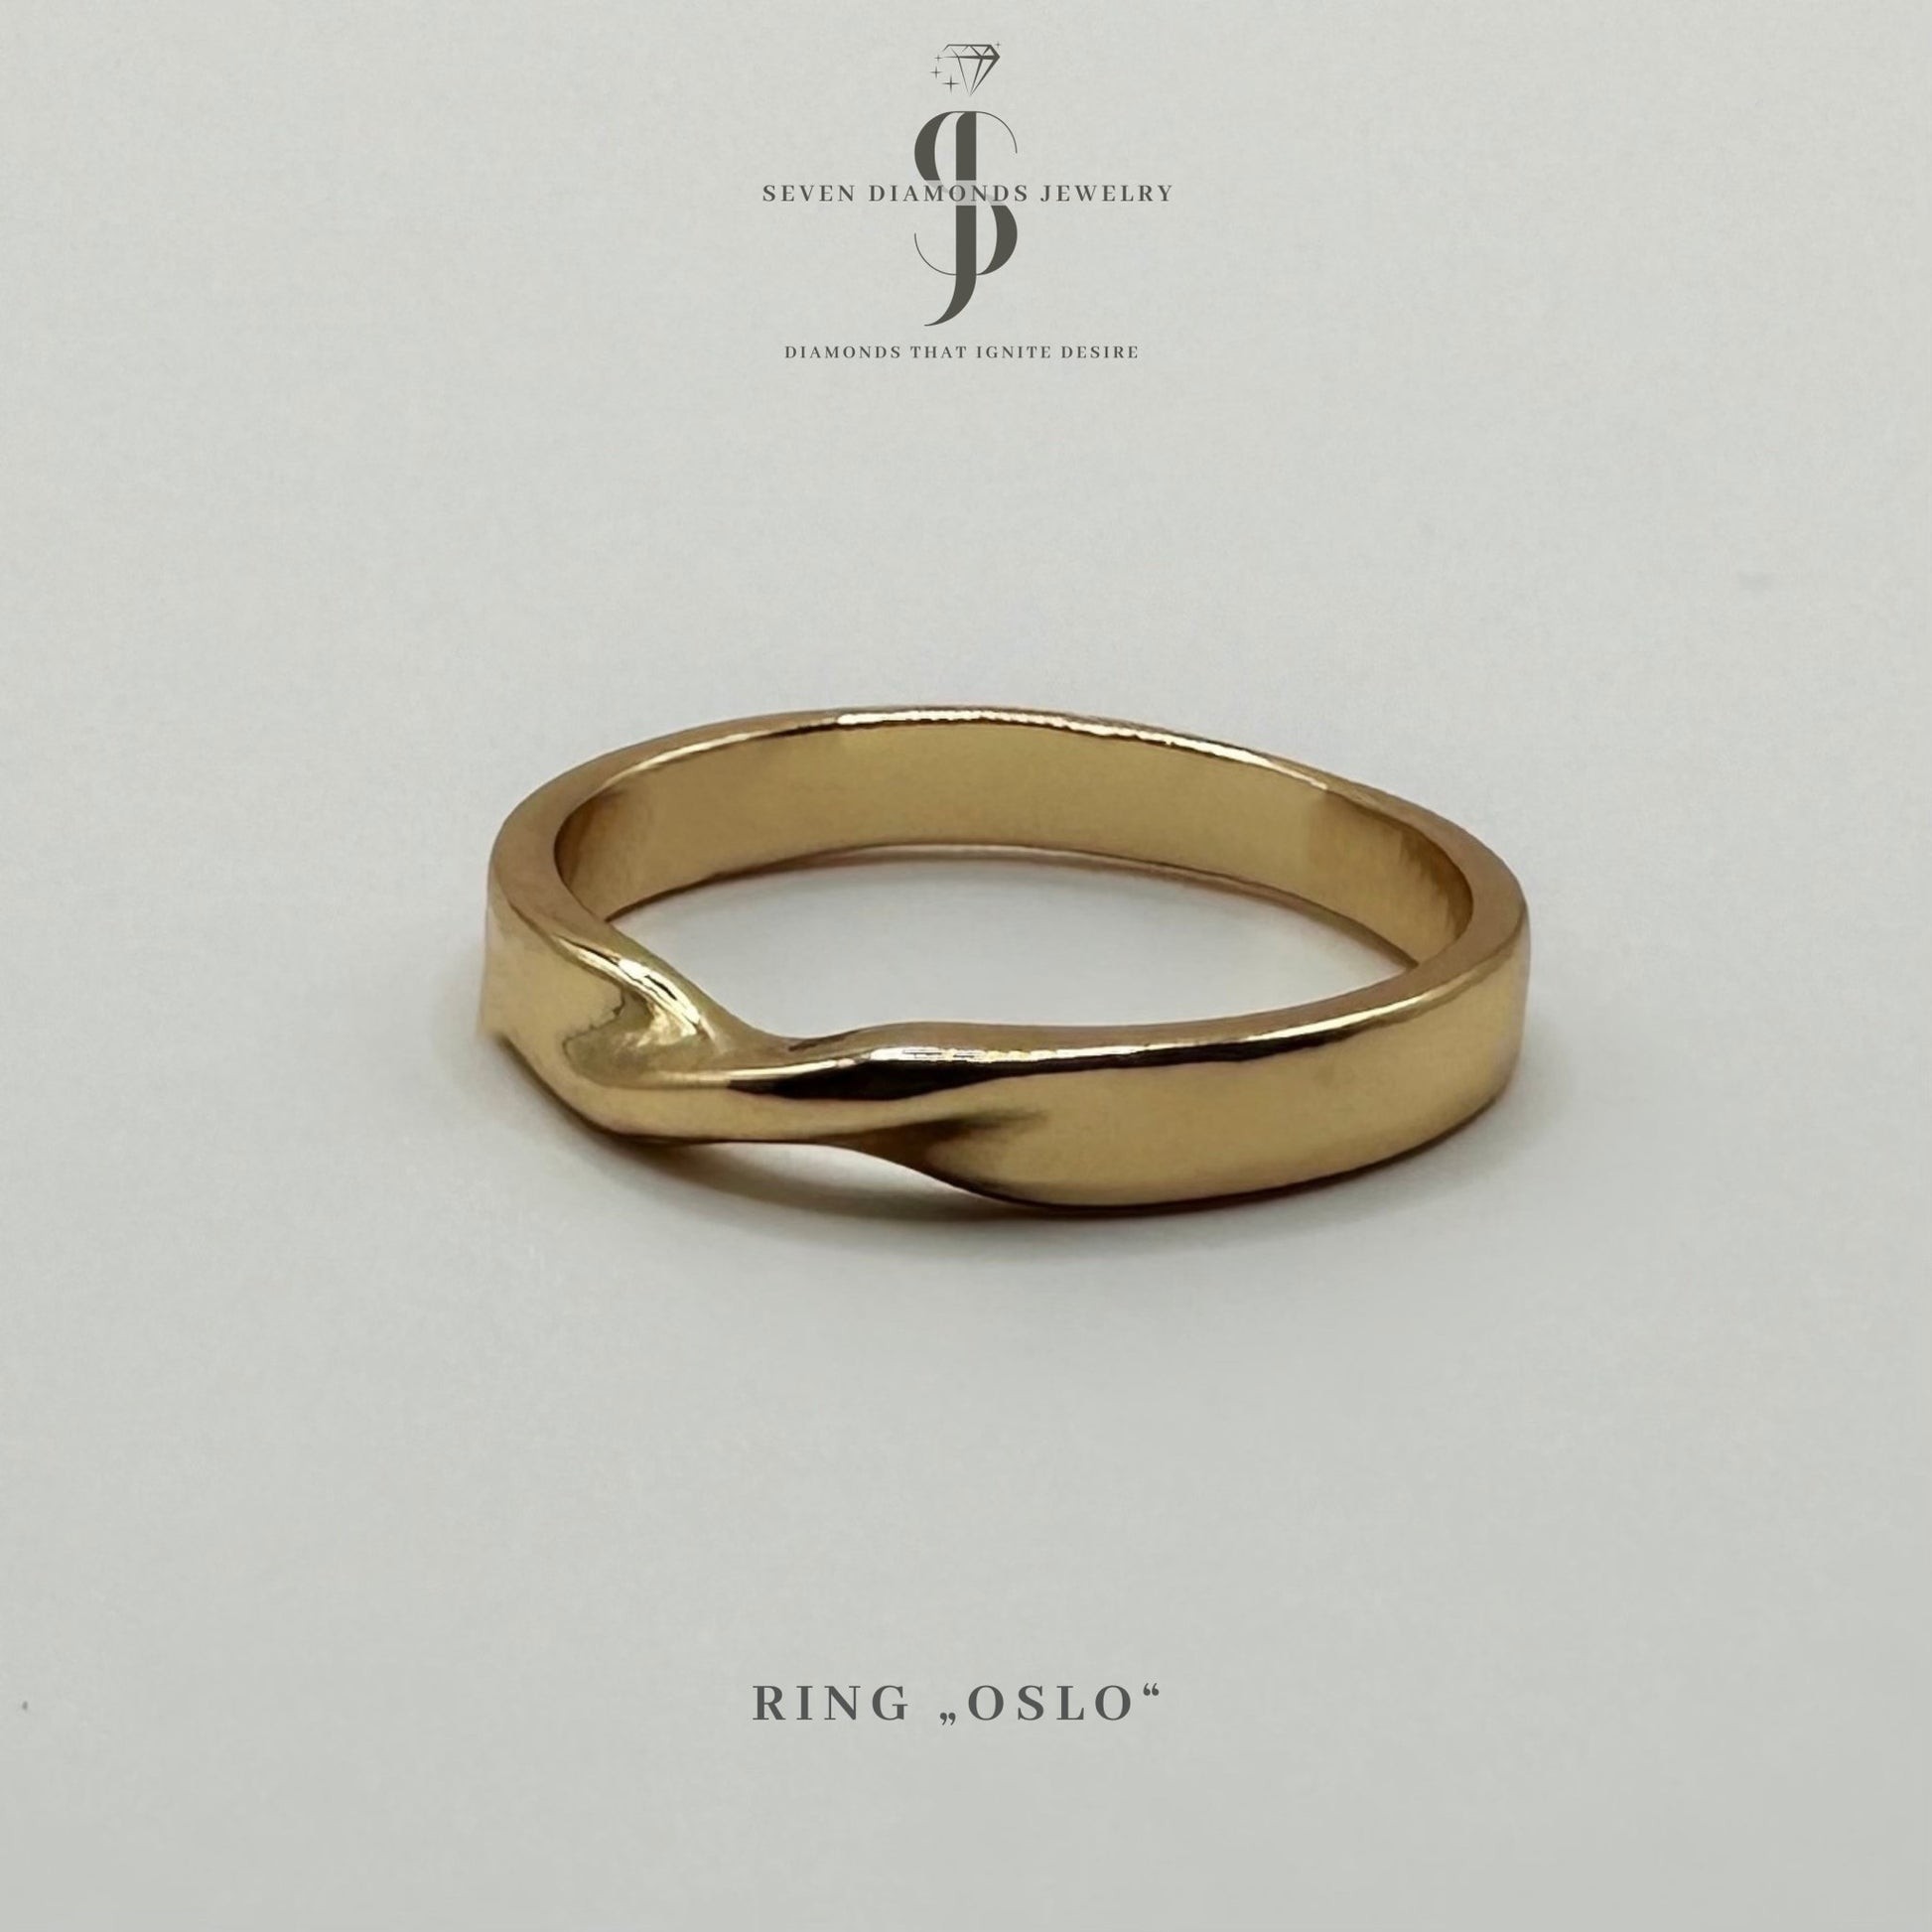 RING „OSLO - Seven Diamonds Jewelry